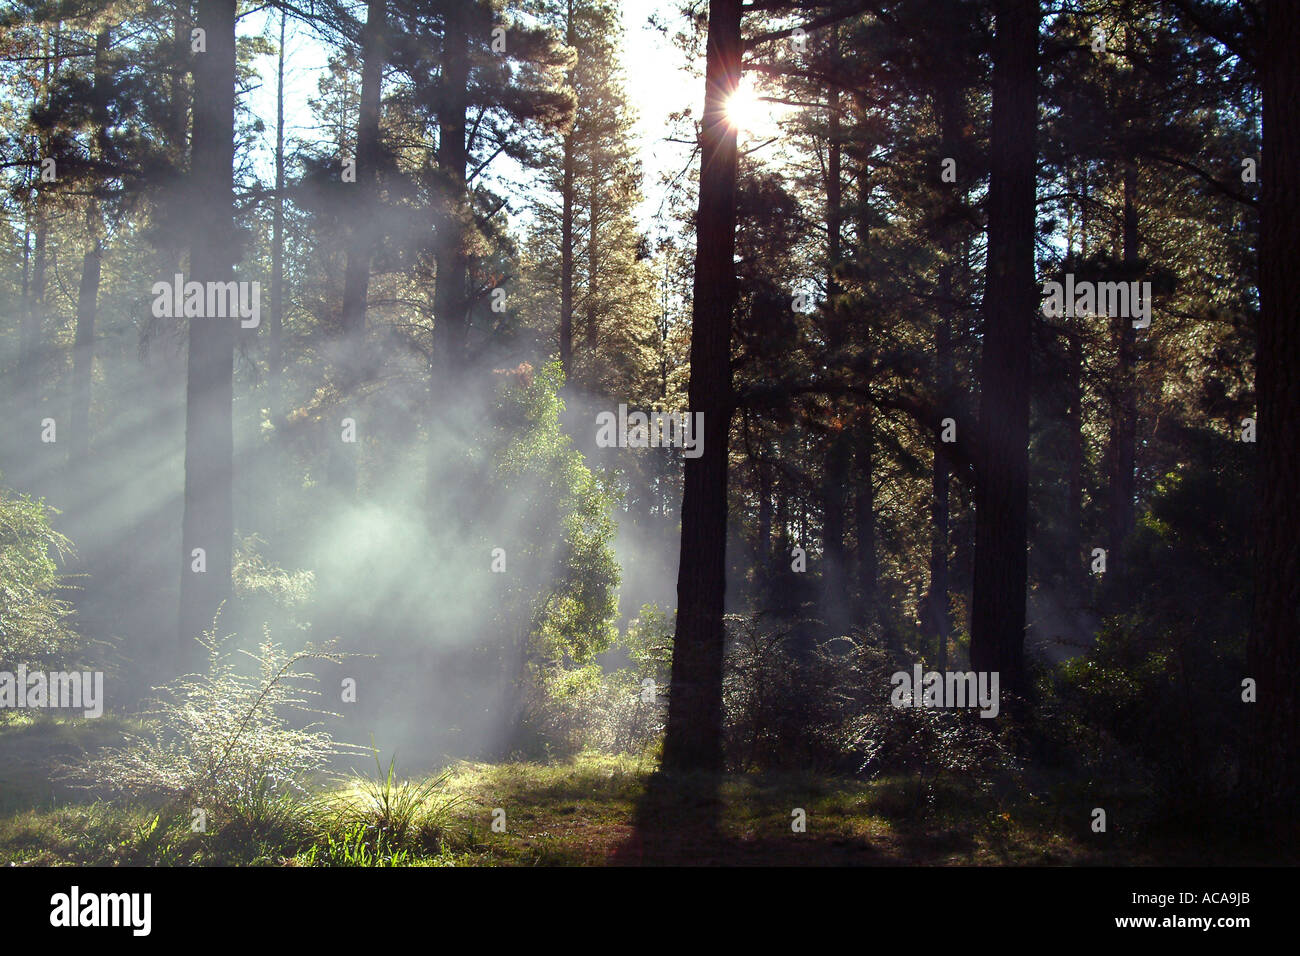 Smoky forest scene Stock Photo